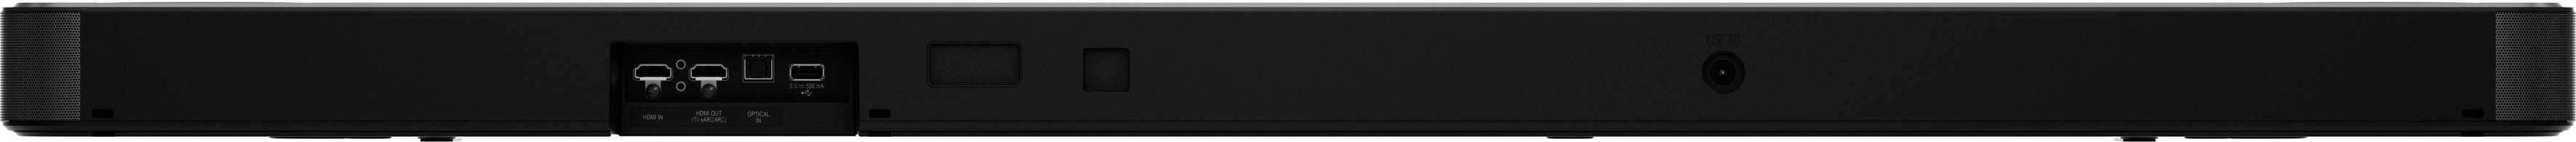 LG SPD75YA 400 Soundbar WLAN (Bluetooth, 3.1.2 W) (WiFi)